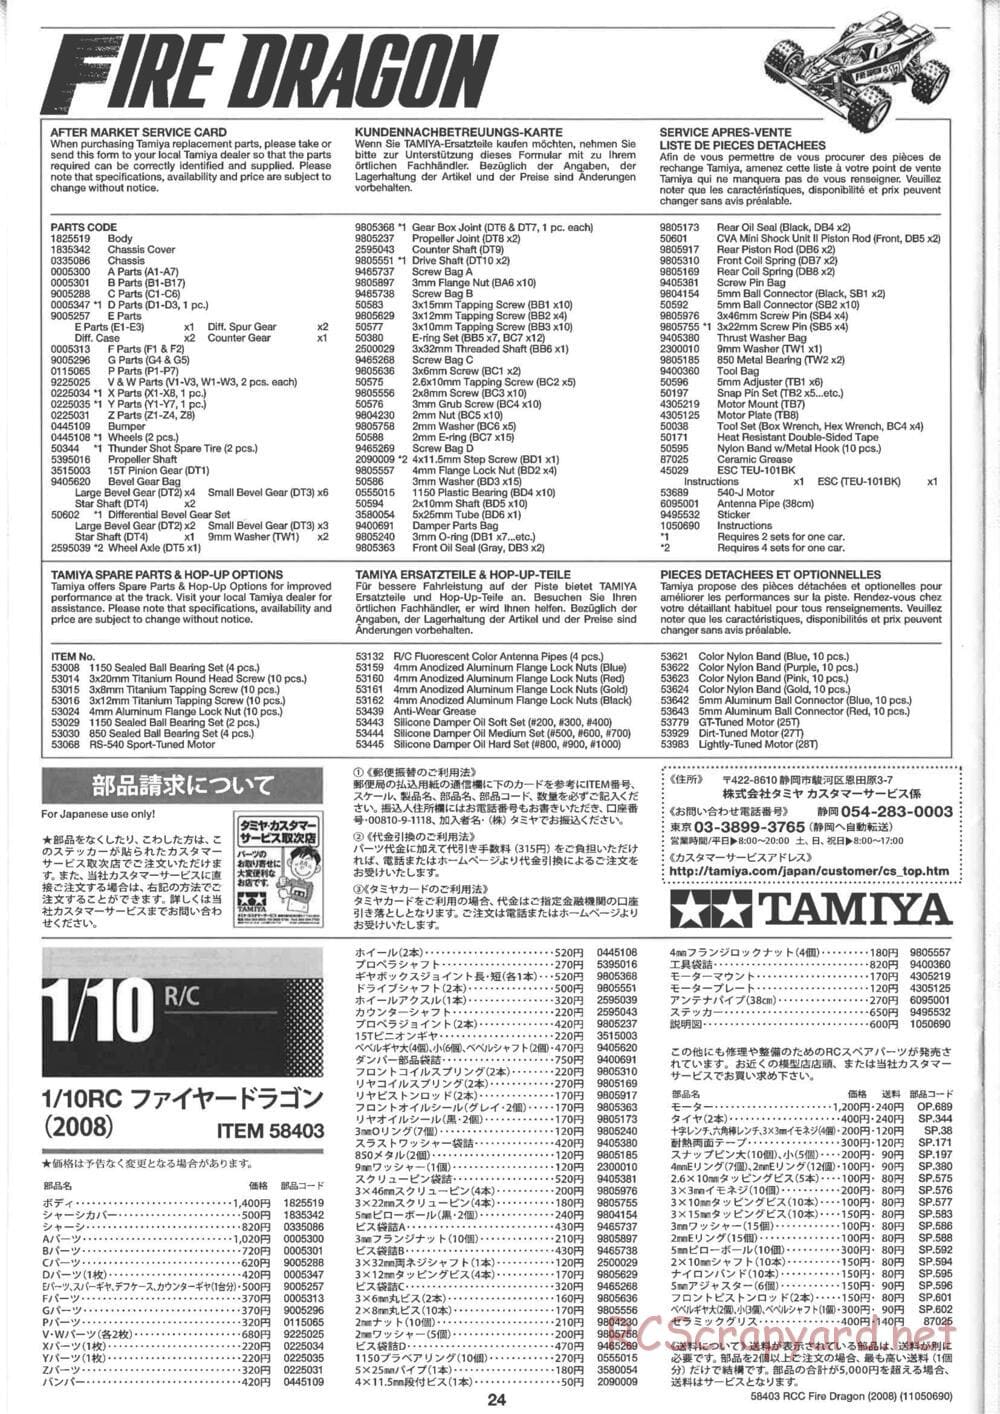 Tamiya - Fire Dragon 2008 - TS2 Chassis - Manual - Page 24